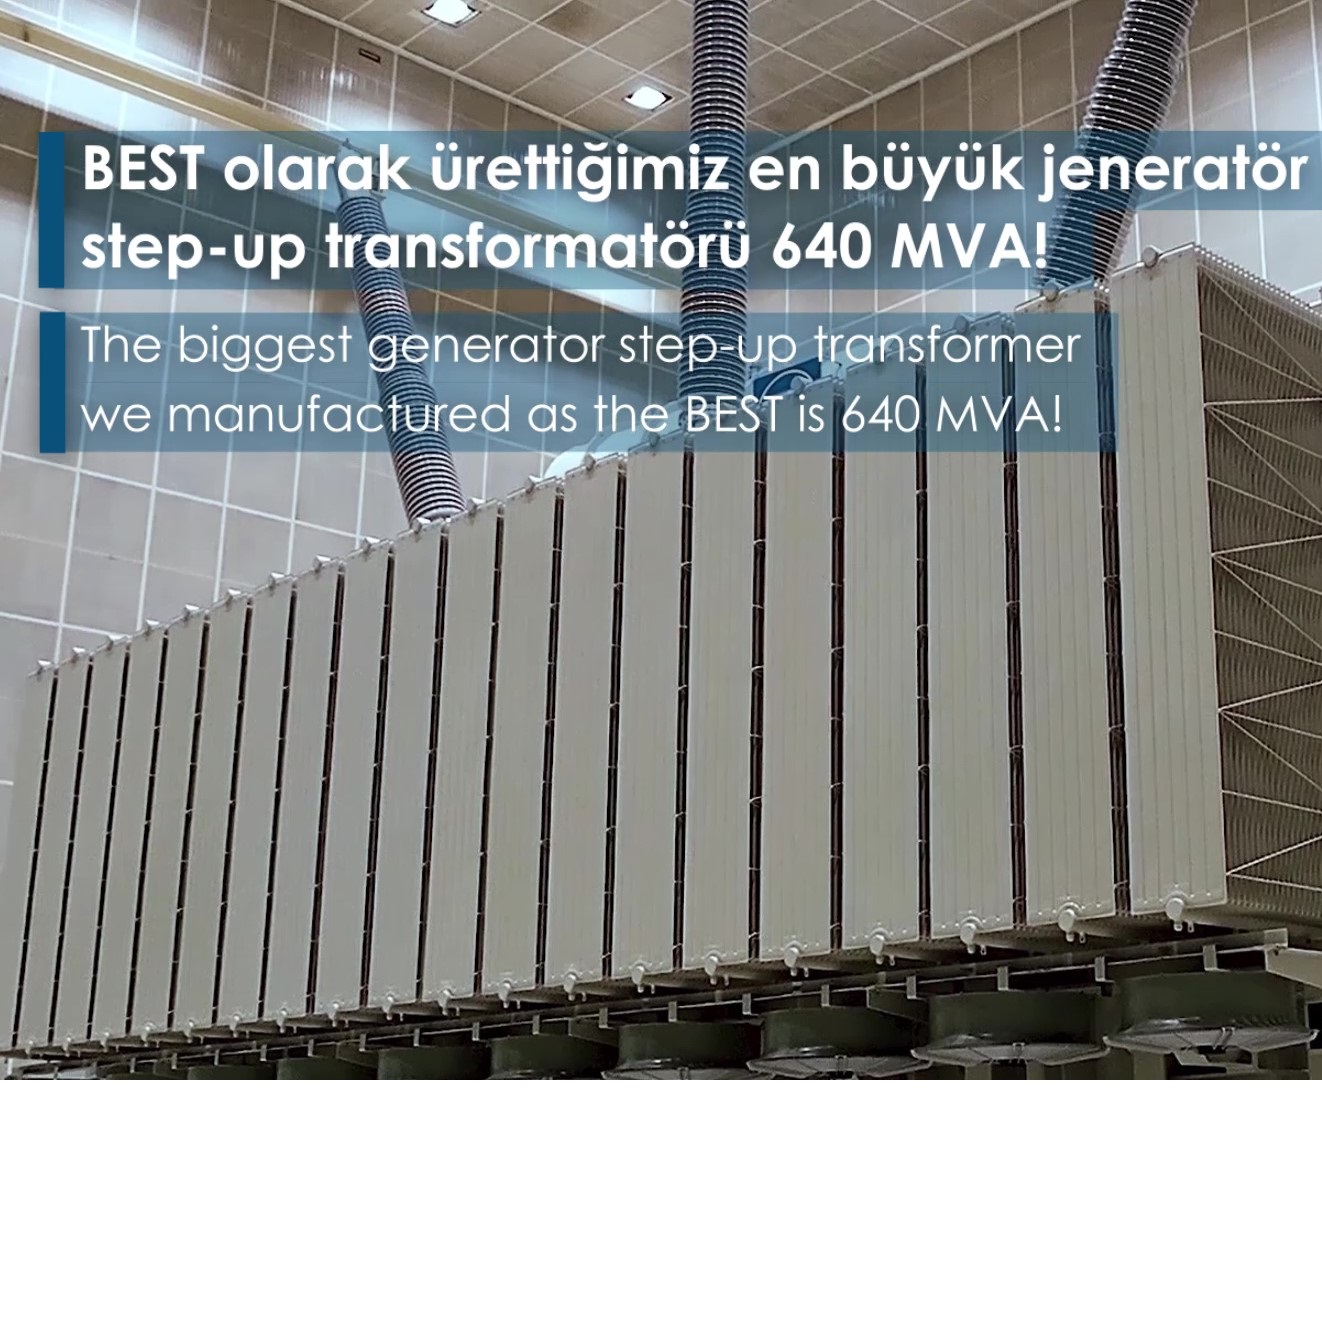 Our Company Record : 640 MVA Step-up Transformer